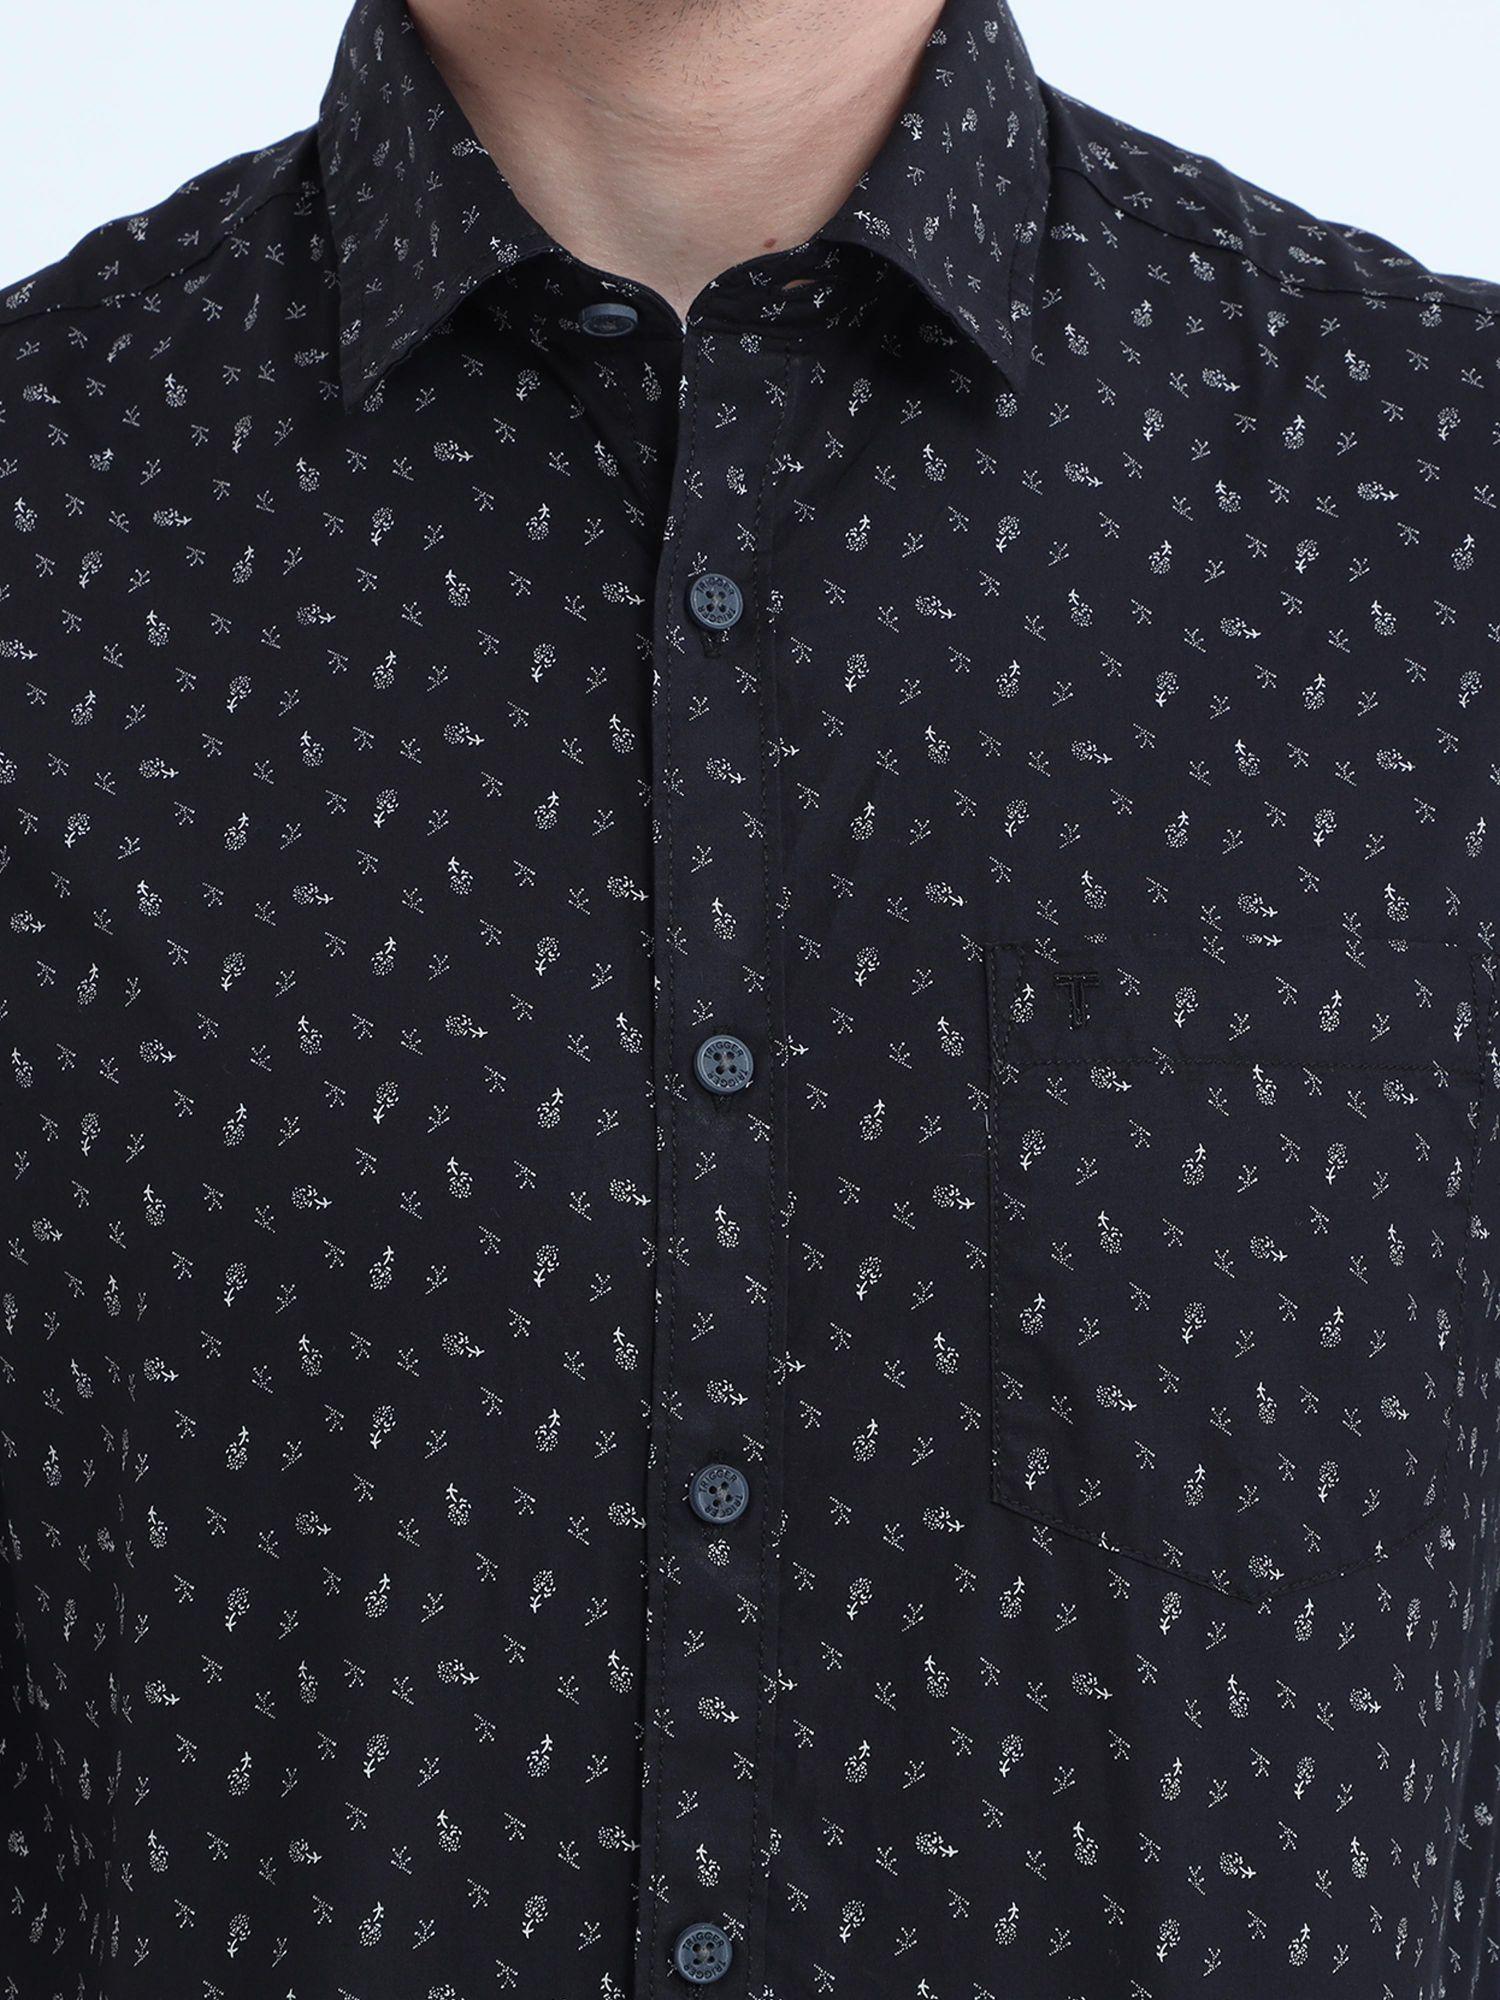 Medrid Men's Slim Fit Casual Shirt - Floral Black Full Sleeves - Triggerjeans